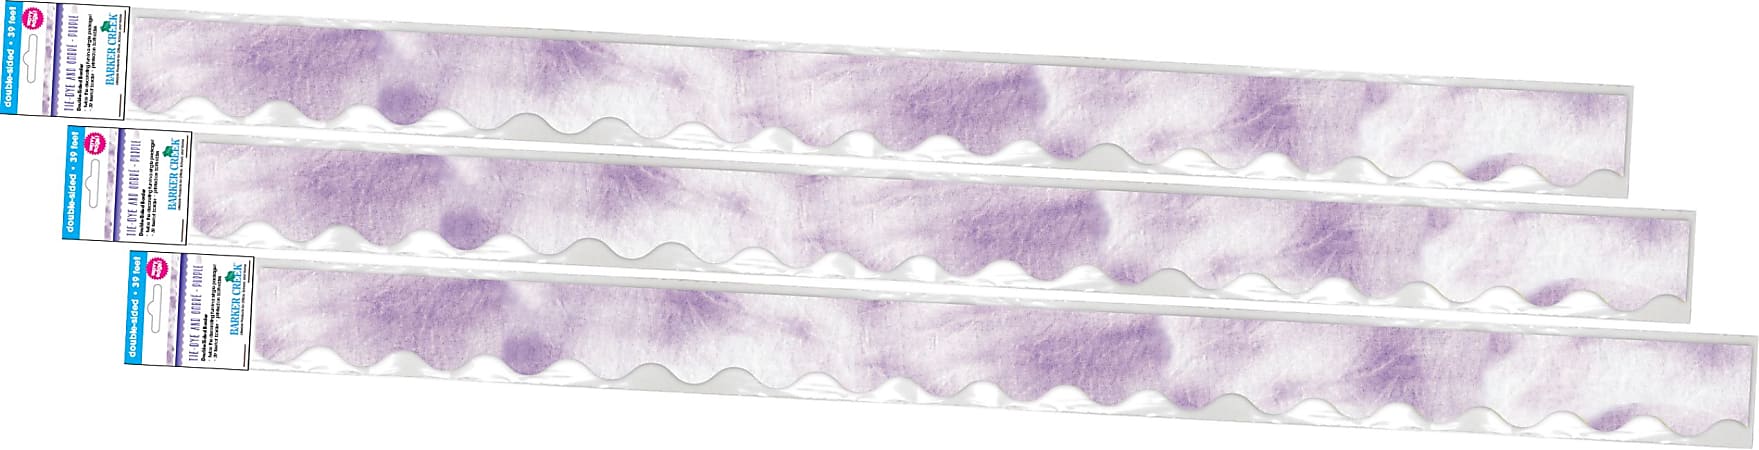 Barker Creek Double-Sided Scalloped-Edge Border Strips, 2-1/4" x 36", Purple Tie-Dye, Pack Of 39 Strips